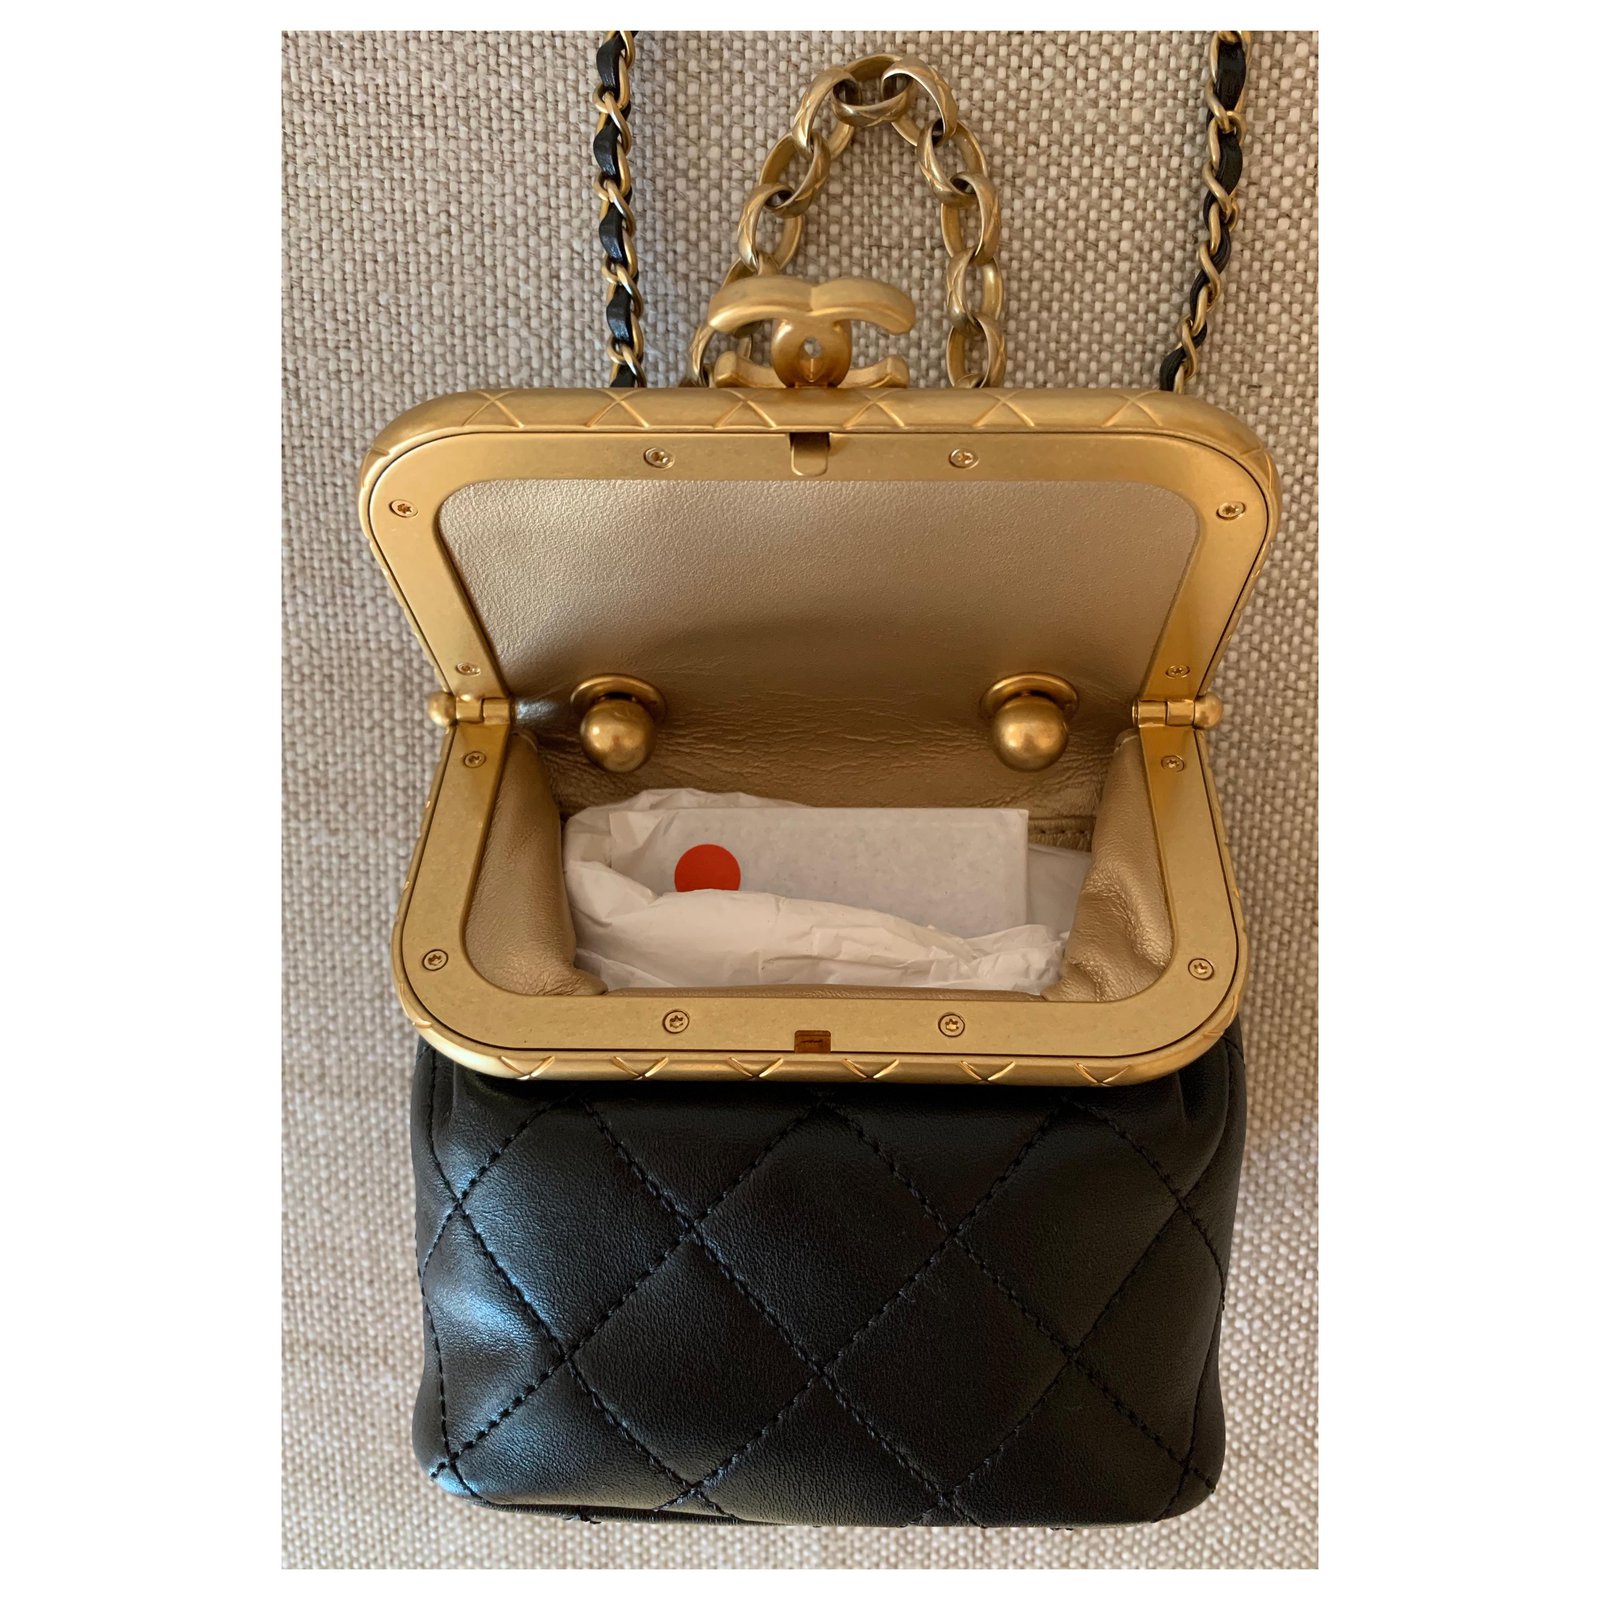 Chanel Mini Black Patent Leather Kiss lock Shoulder Bag at 1stDibs